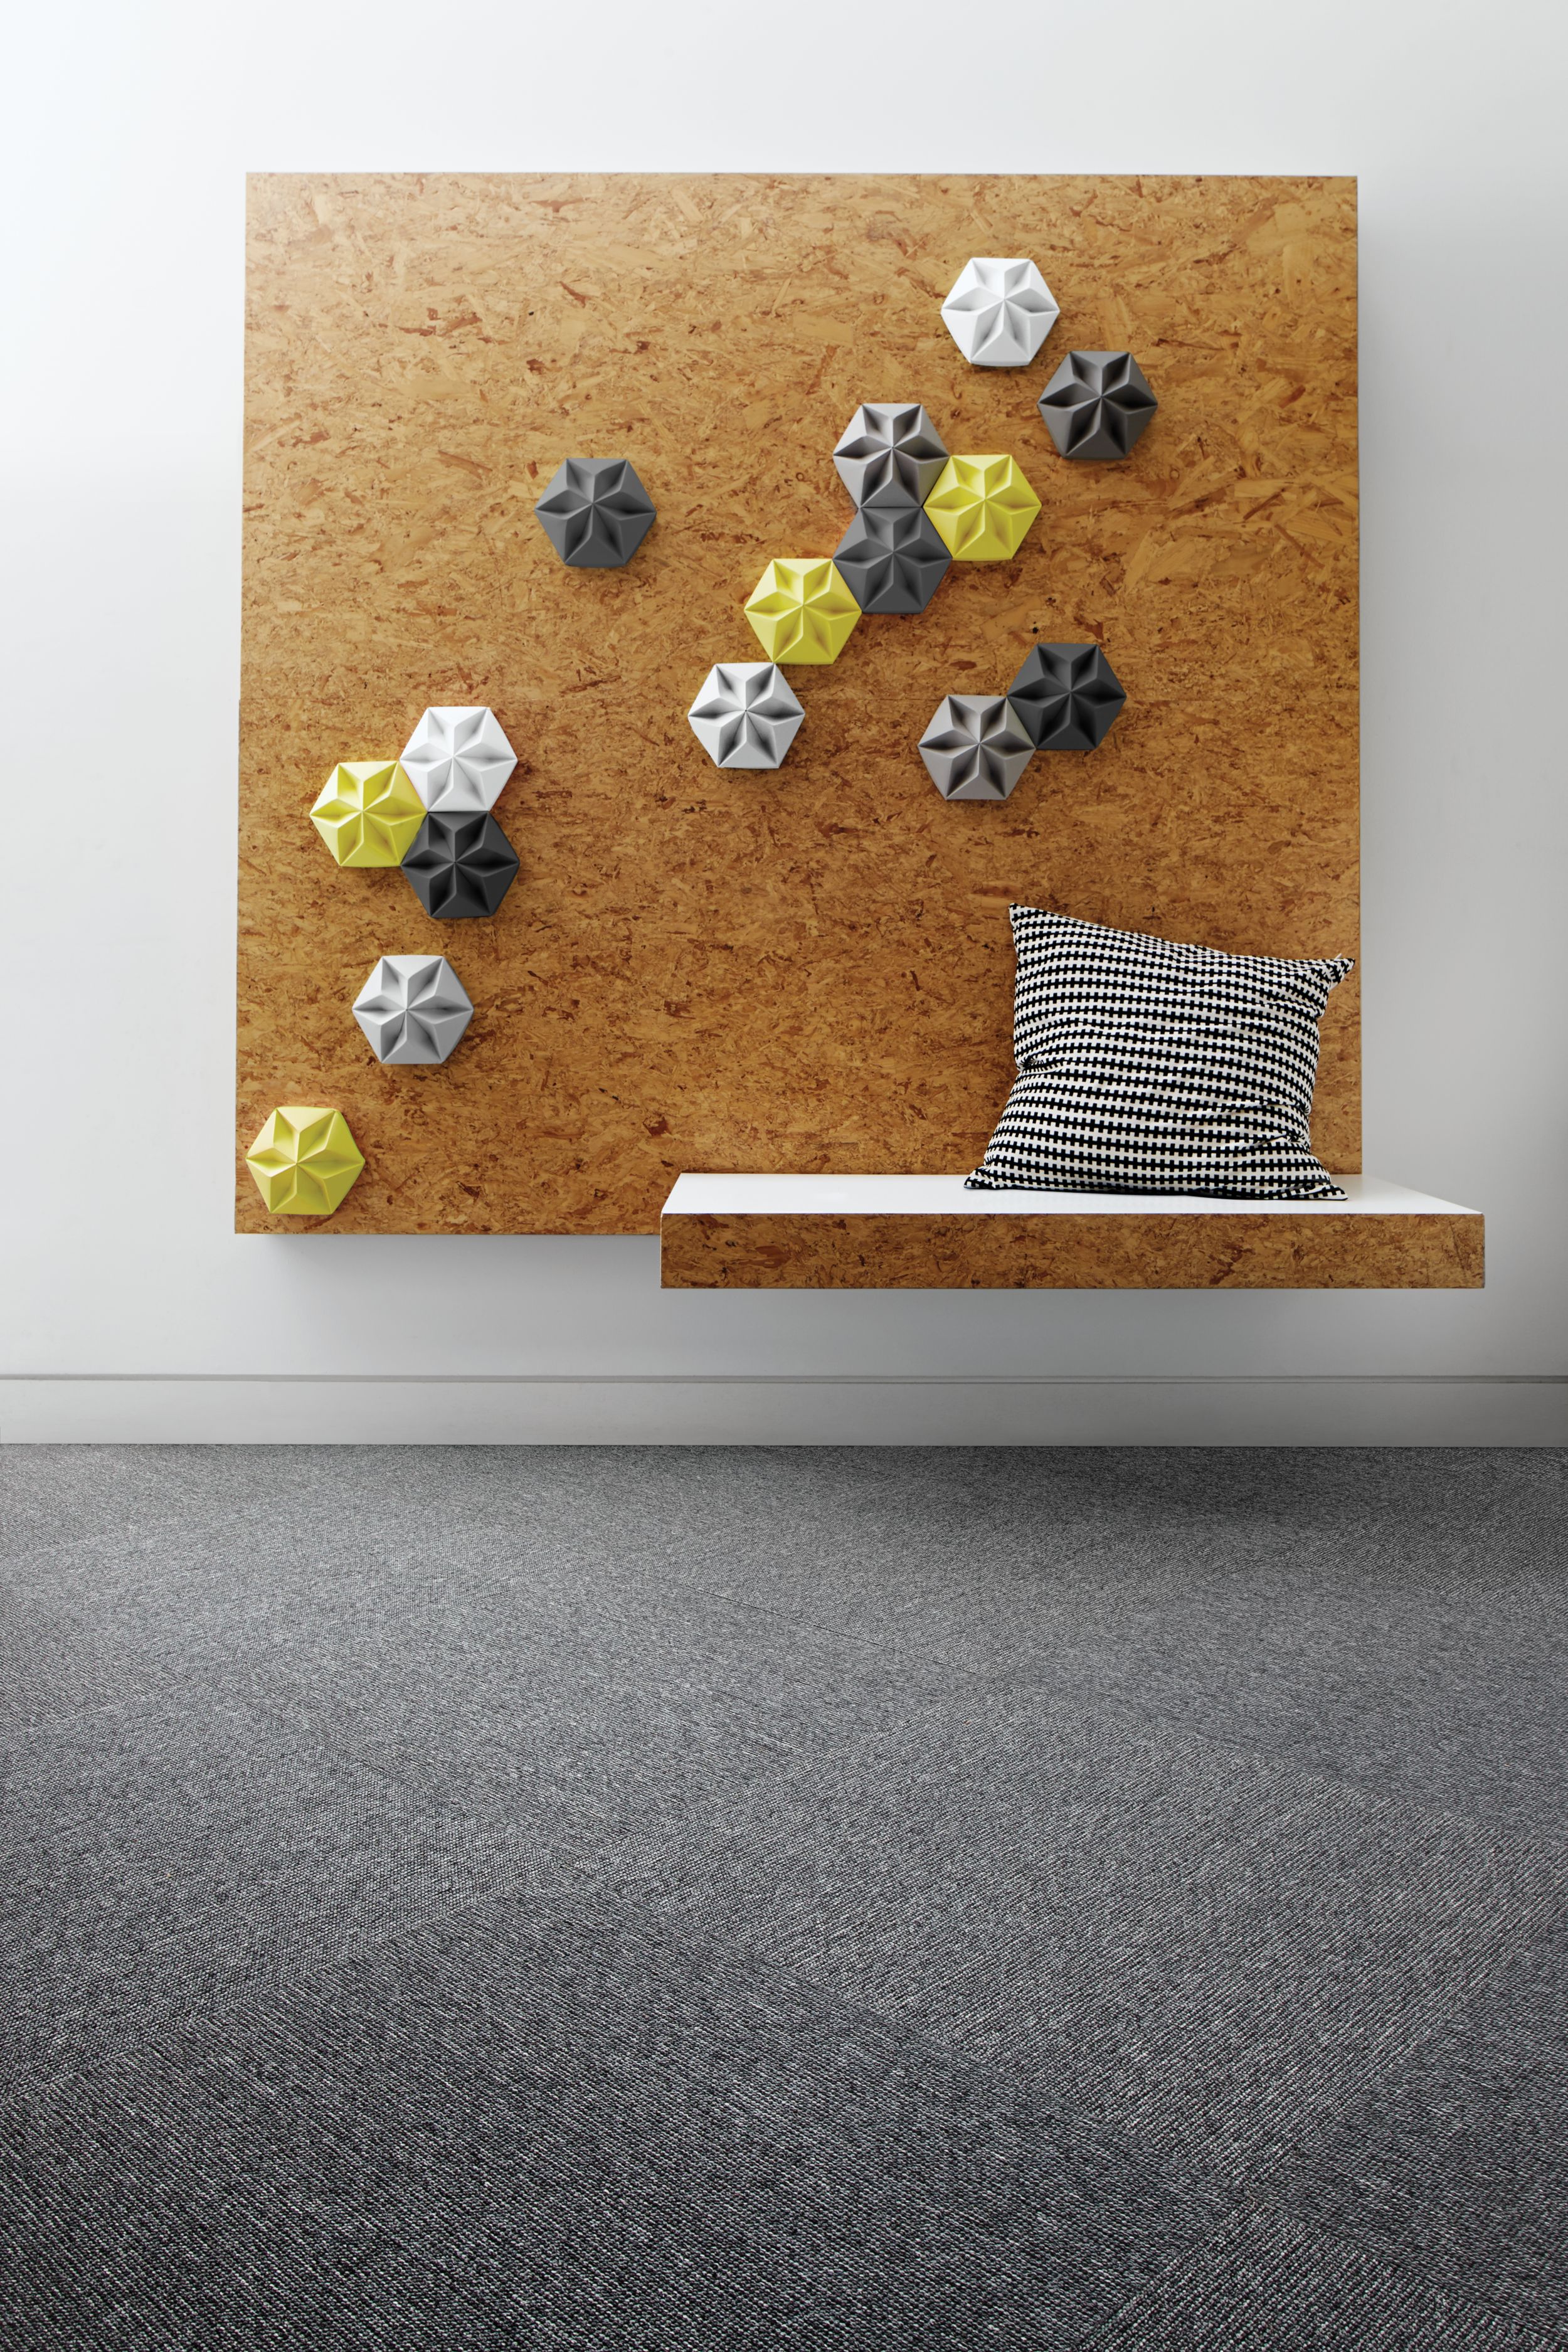  Interface Scandinavian carpet tile in room with suspended shelf and art installation número de imagen 5